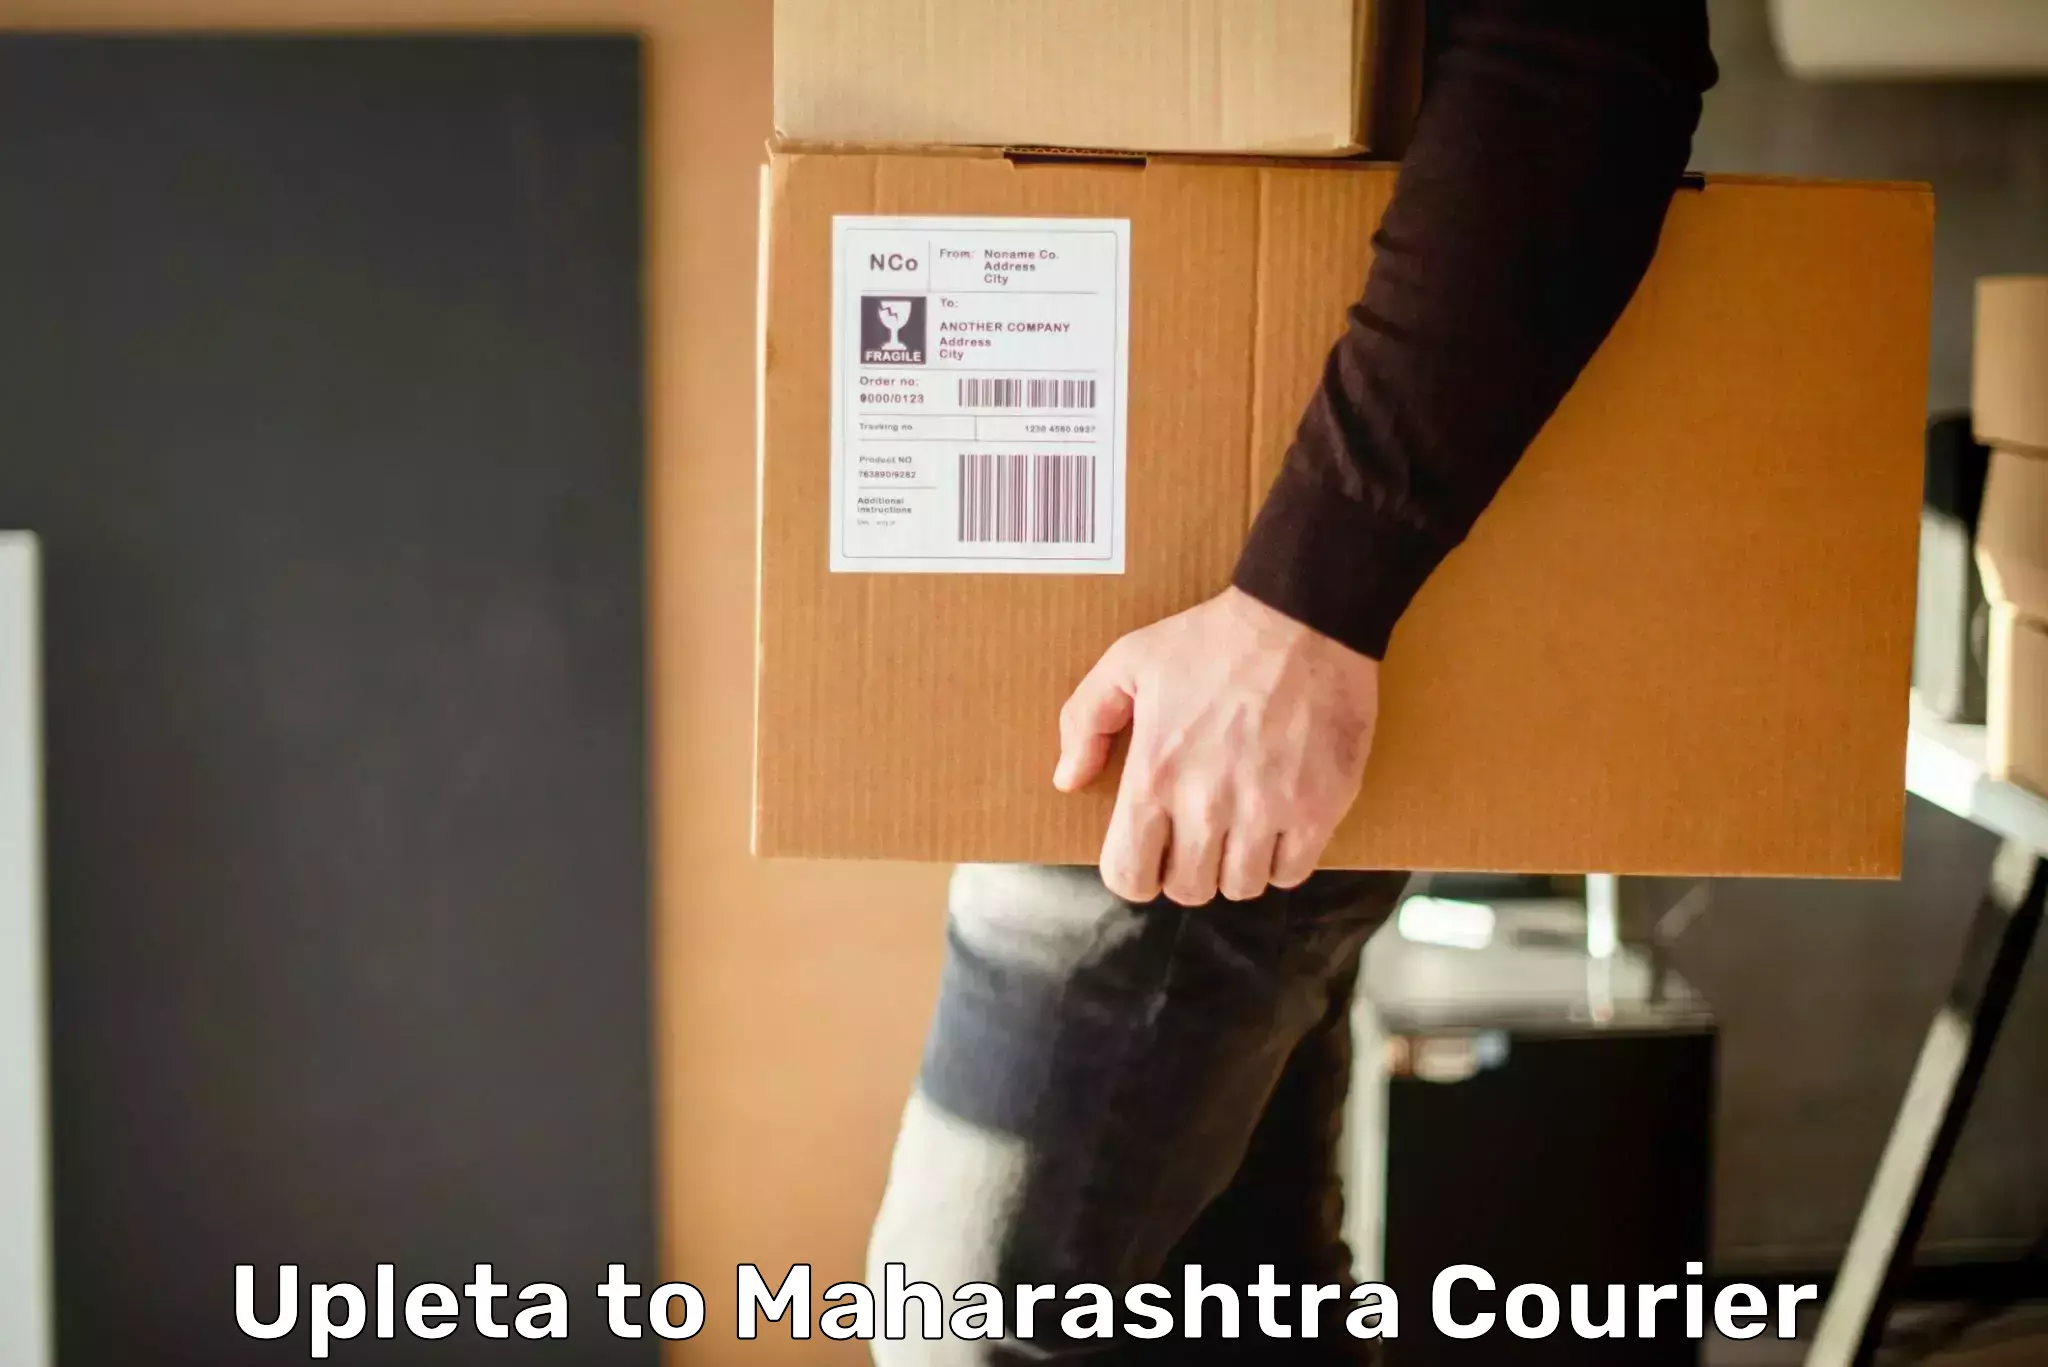 Global shipping solutions Upleta to Maharashtra